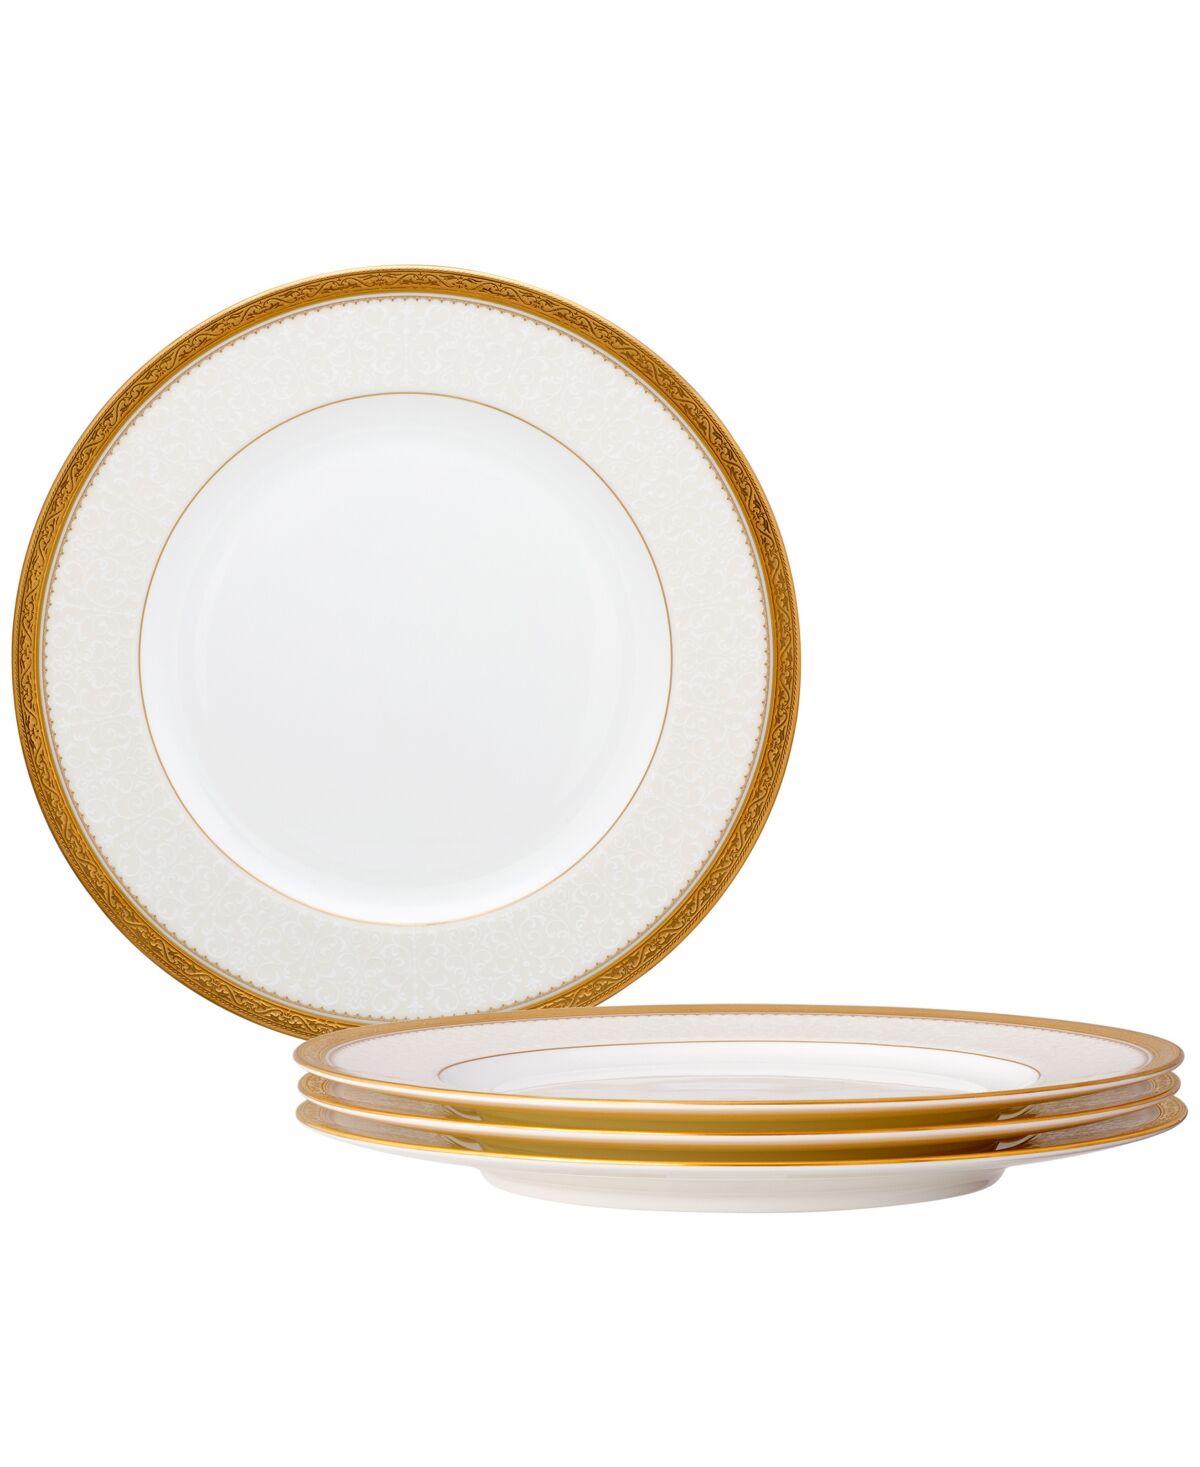 Noritake Odessa Gold Set of 4 Dinner Plates, Service For 4 - White